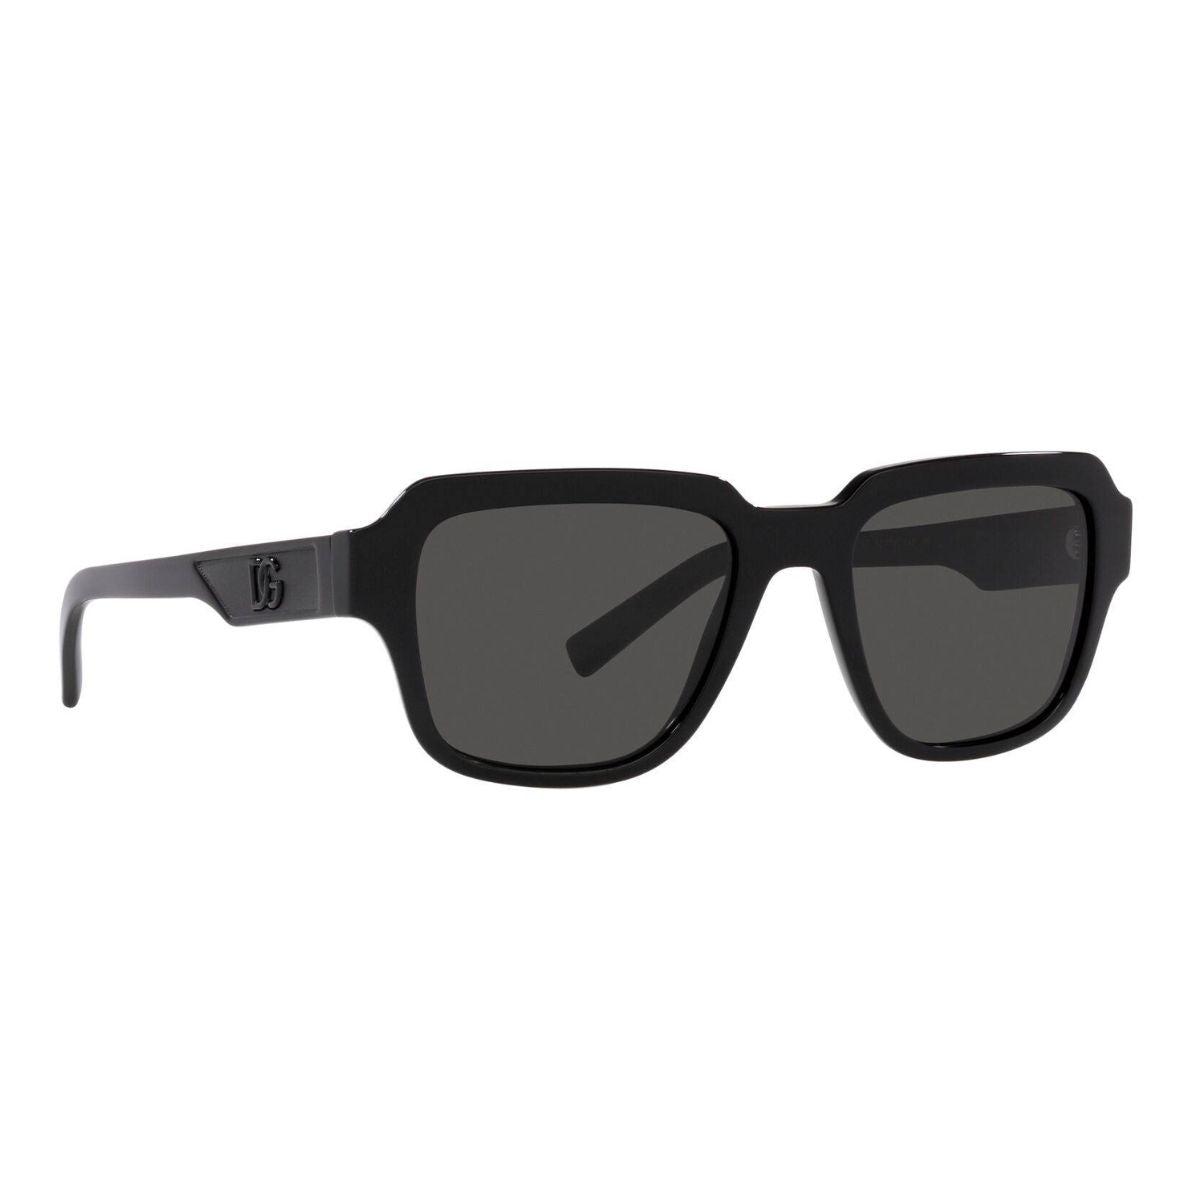 "Stylish Dolce & Gabbana Square Sunglasses For Mens At Optorium"